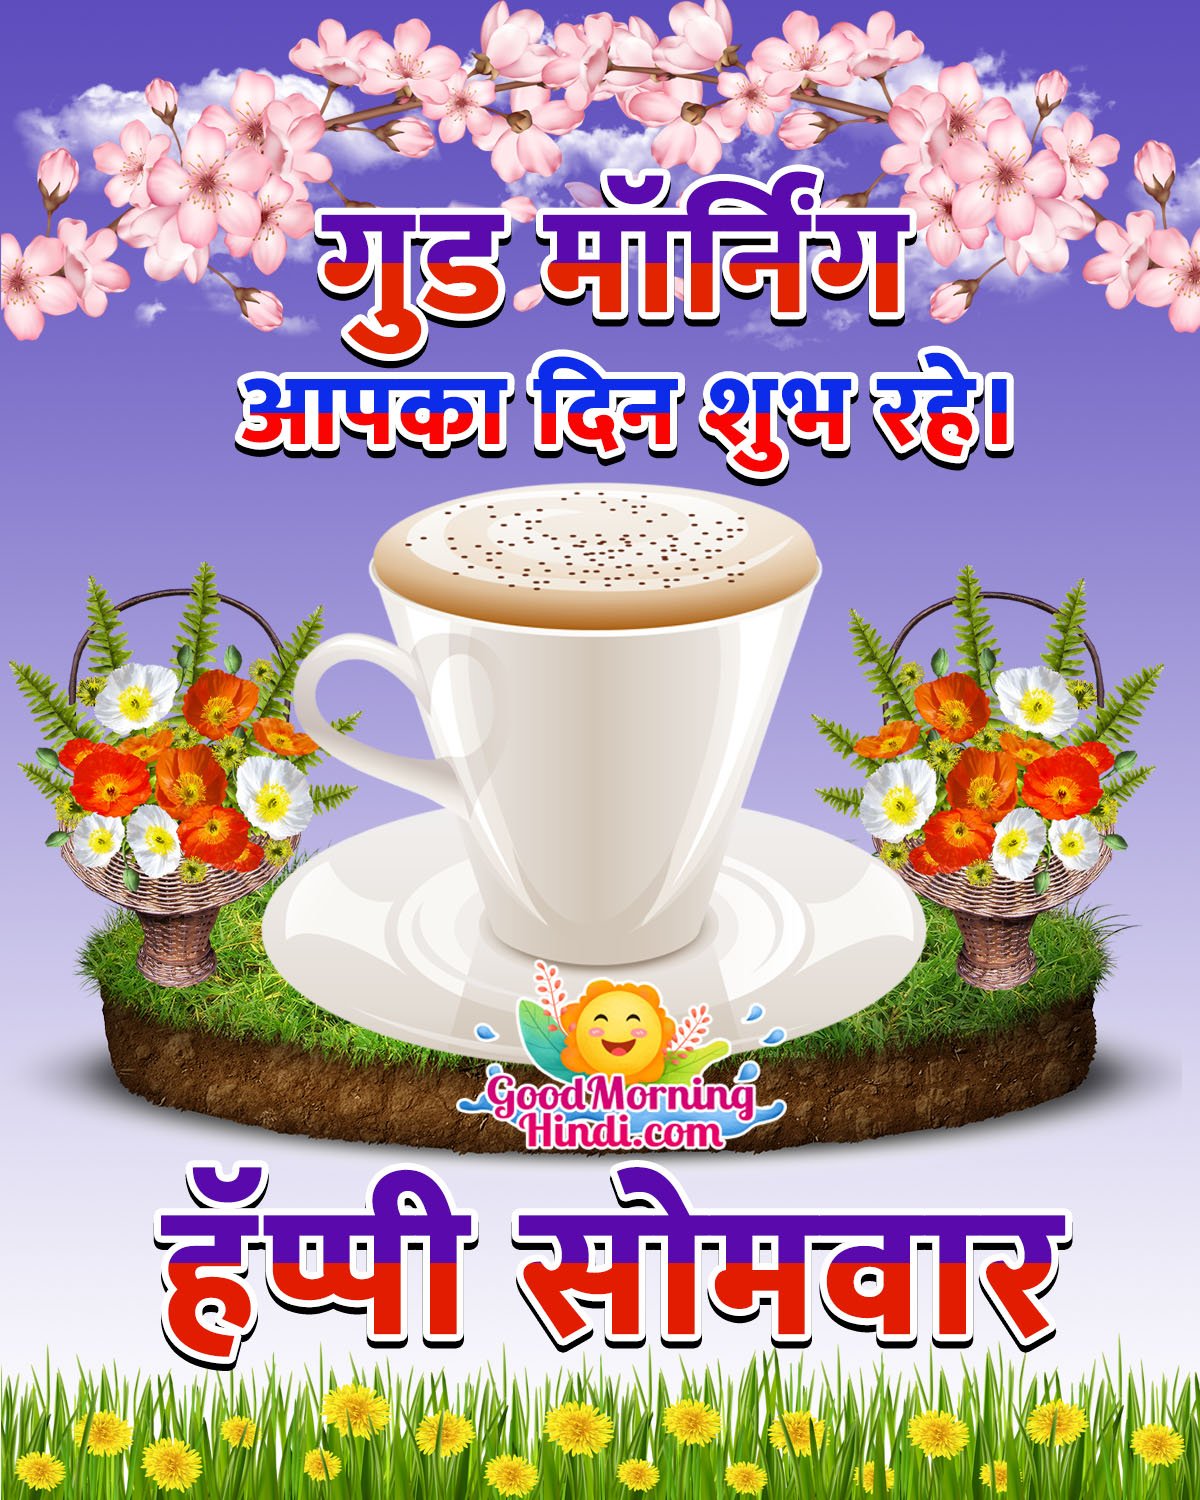 Good Morning Happy Somvar Image